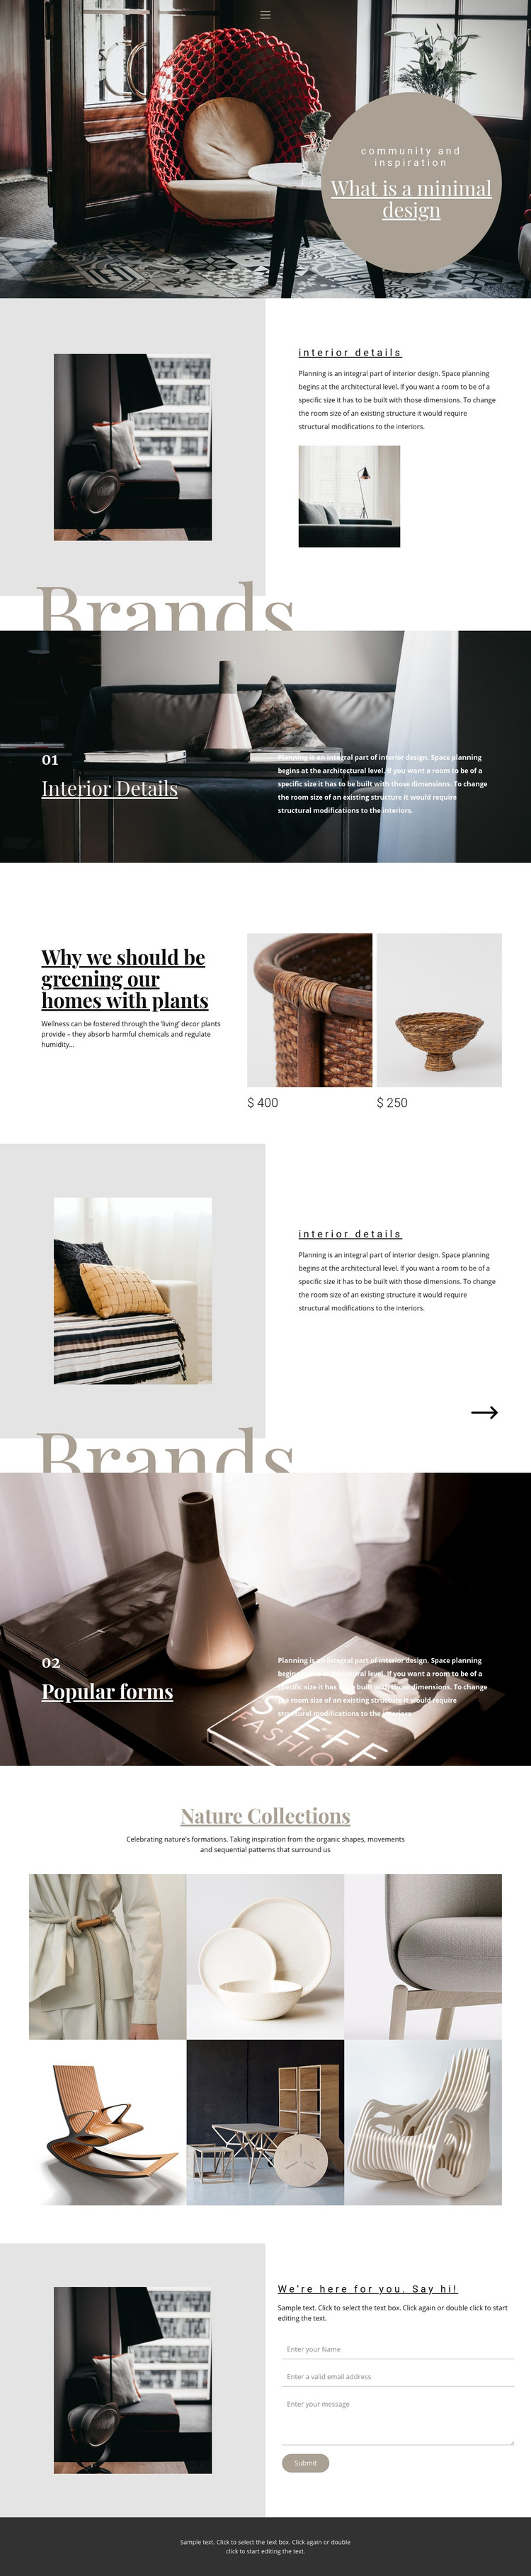 Interior brands Homepage Design